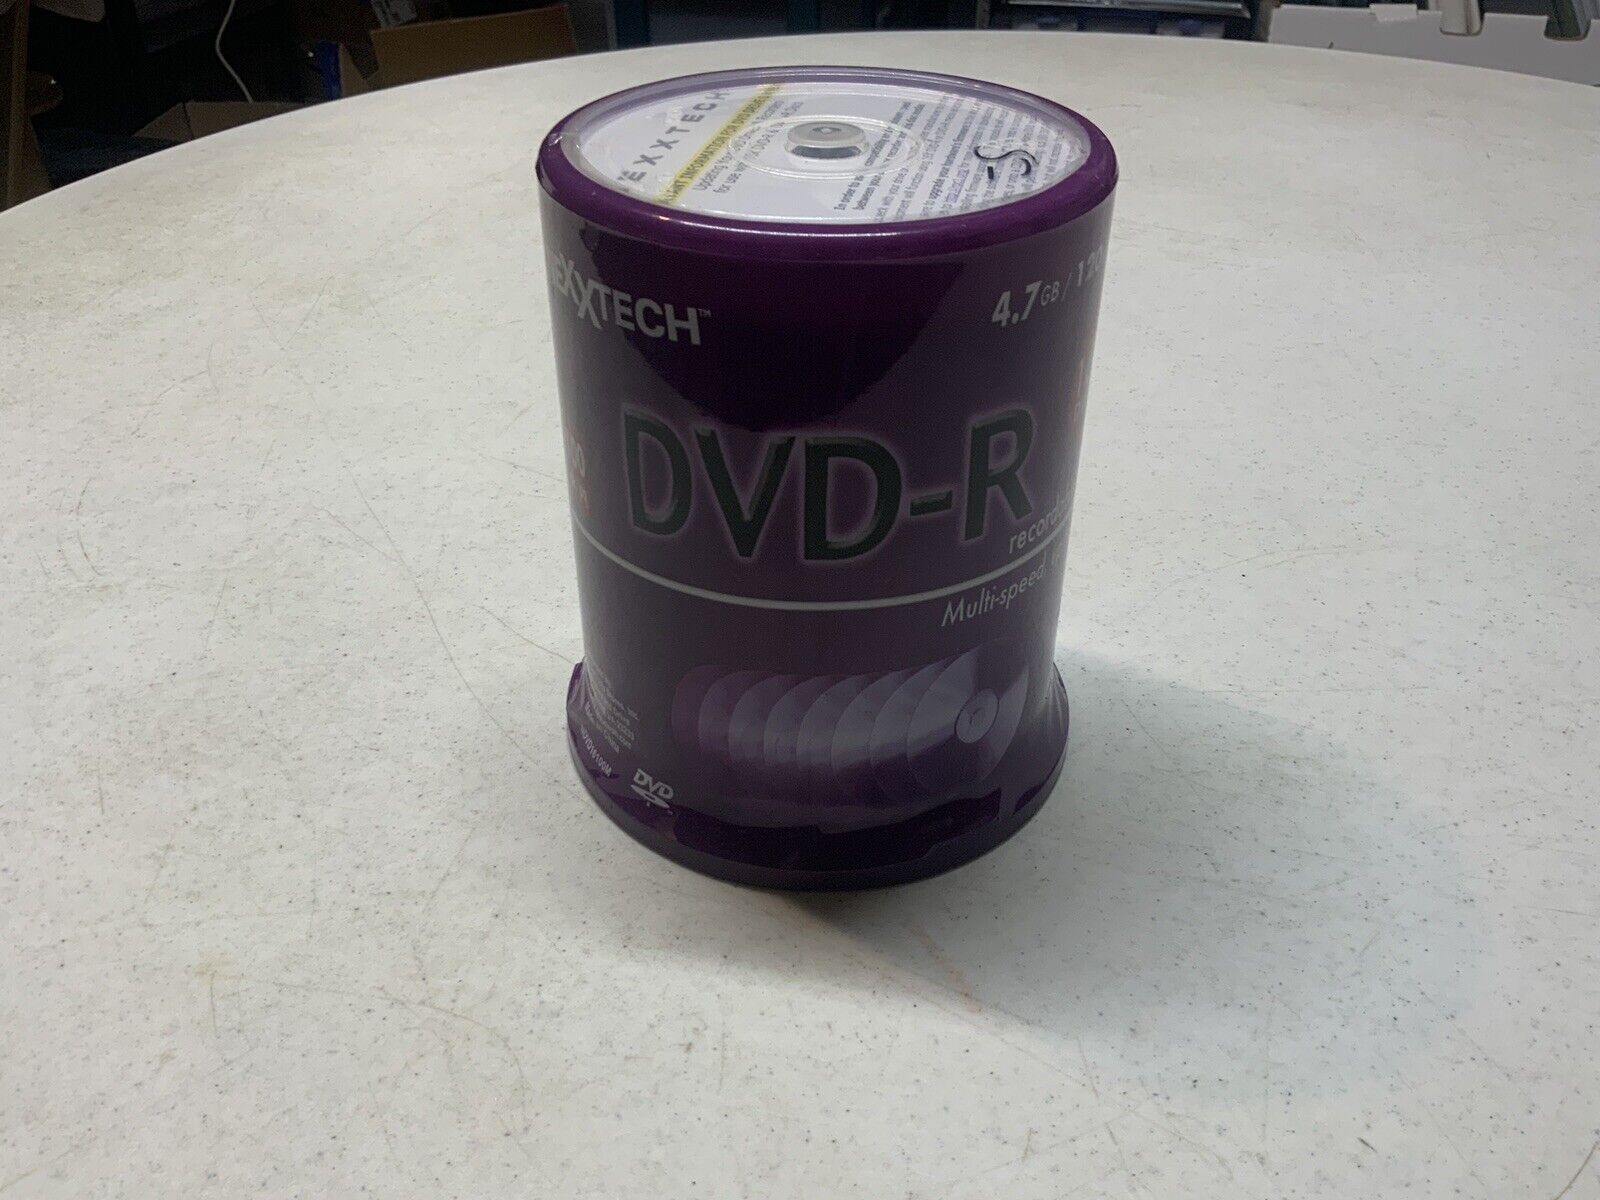 NexxTech 16x 120 Min. 4.7 GB Blank DVD-R 100 Pack NEW SEALED